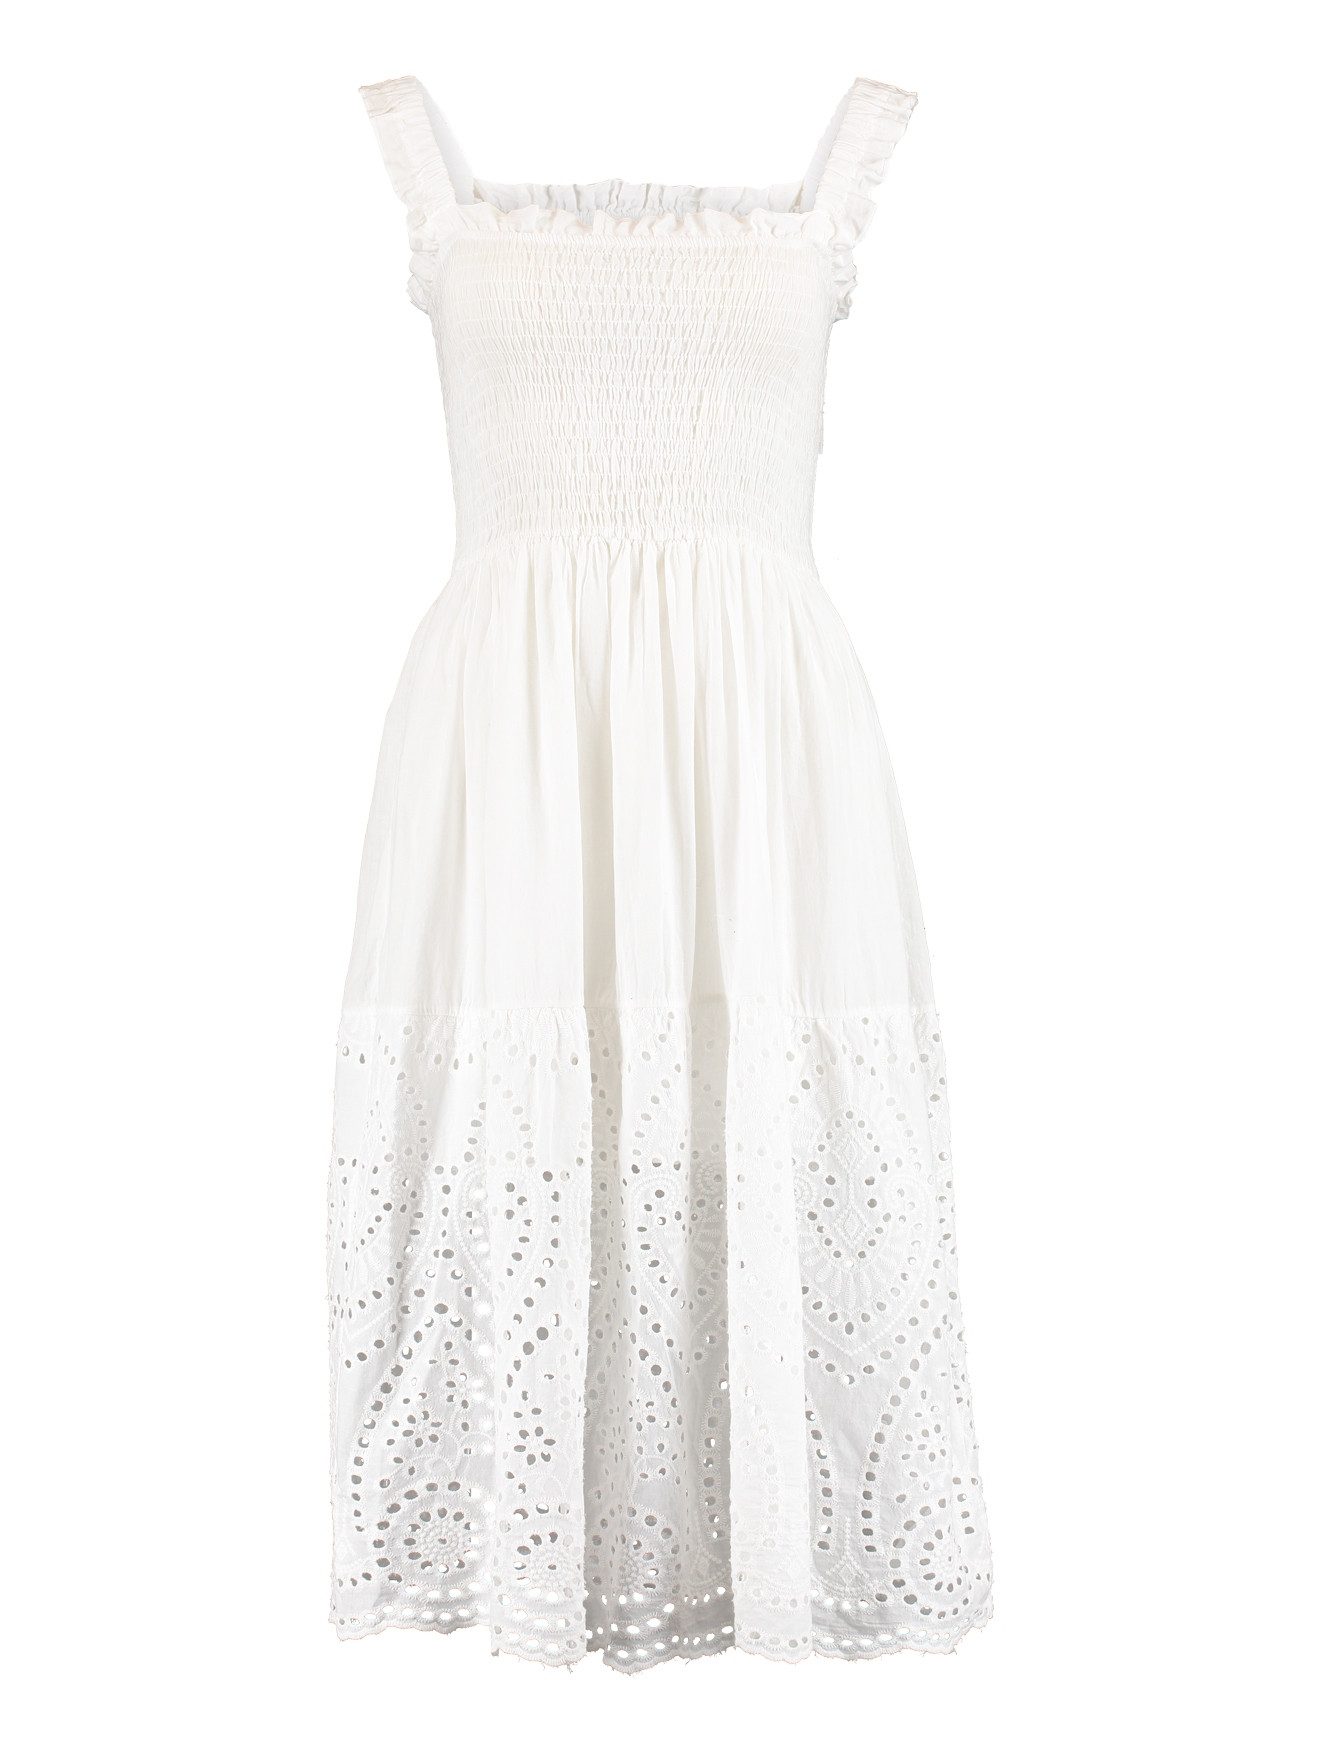 HaILY’S Sommerkleid HaILY'S Kleid weiß